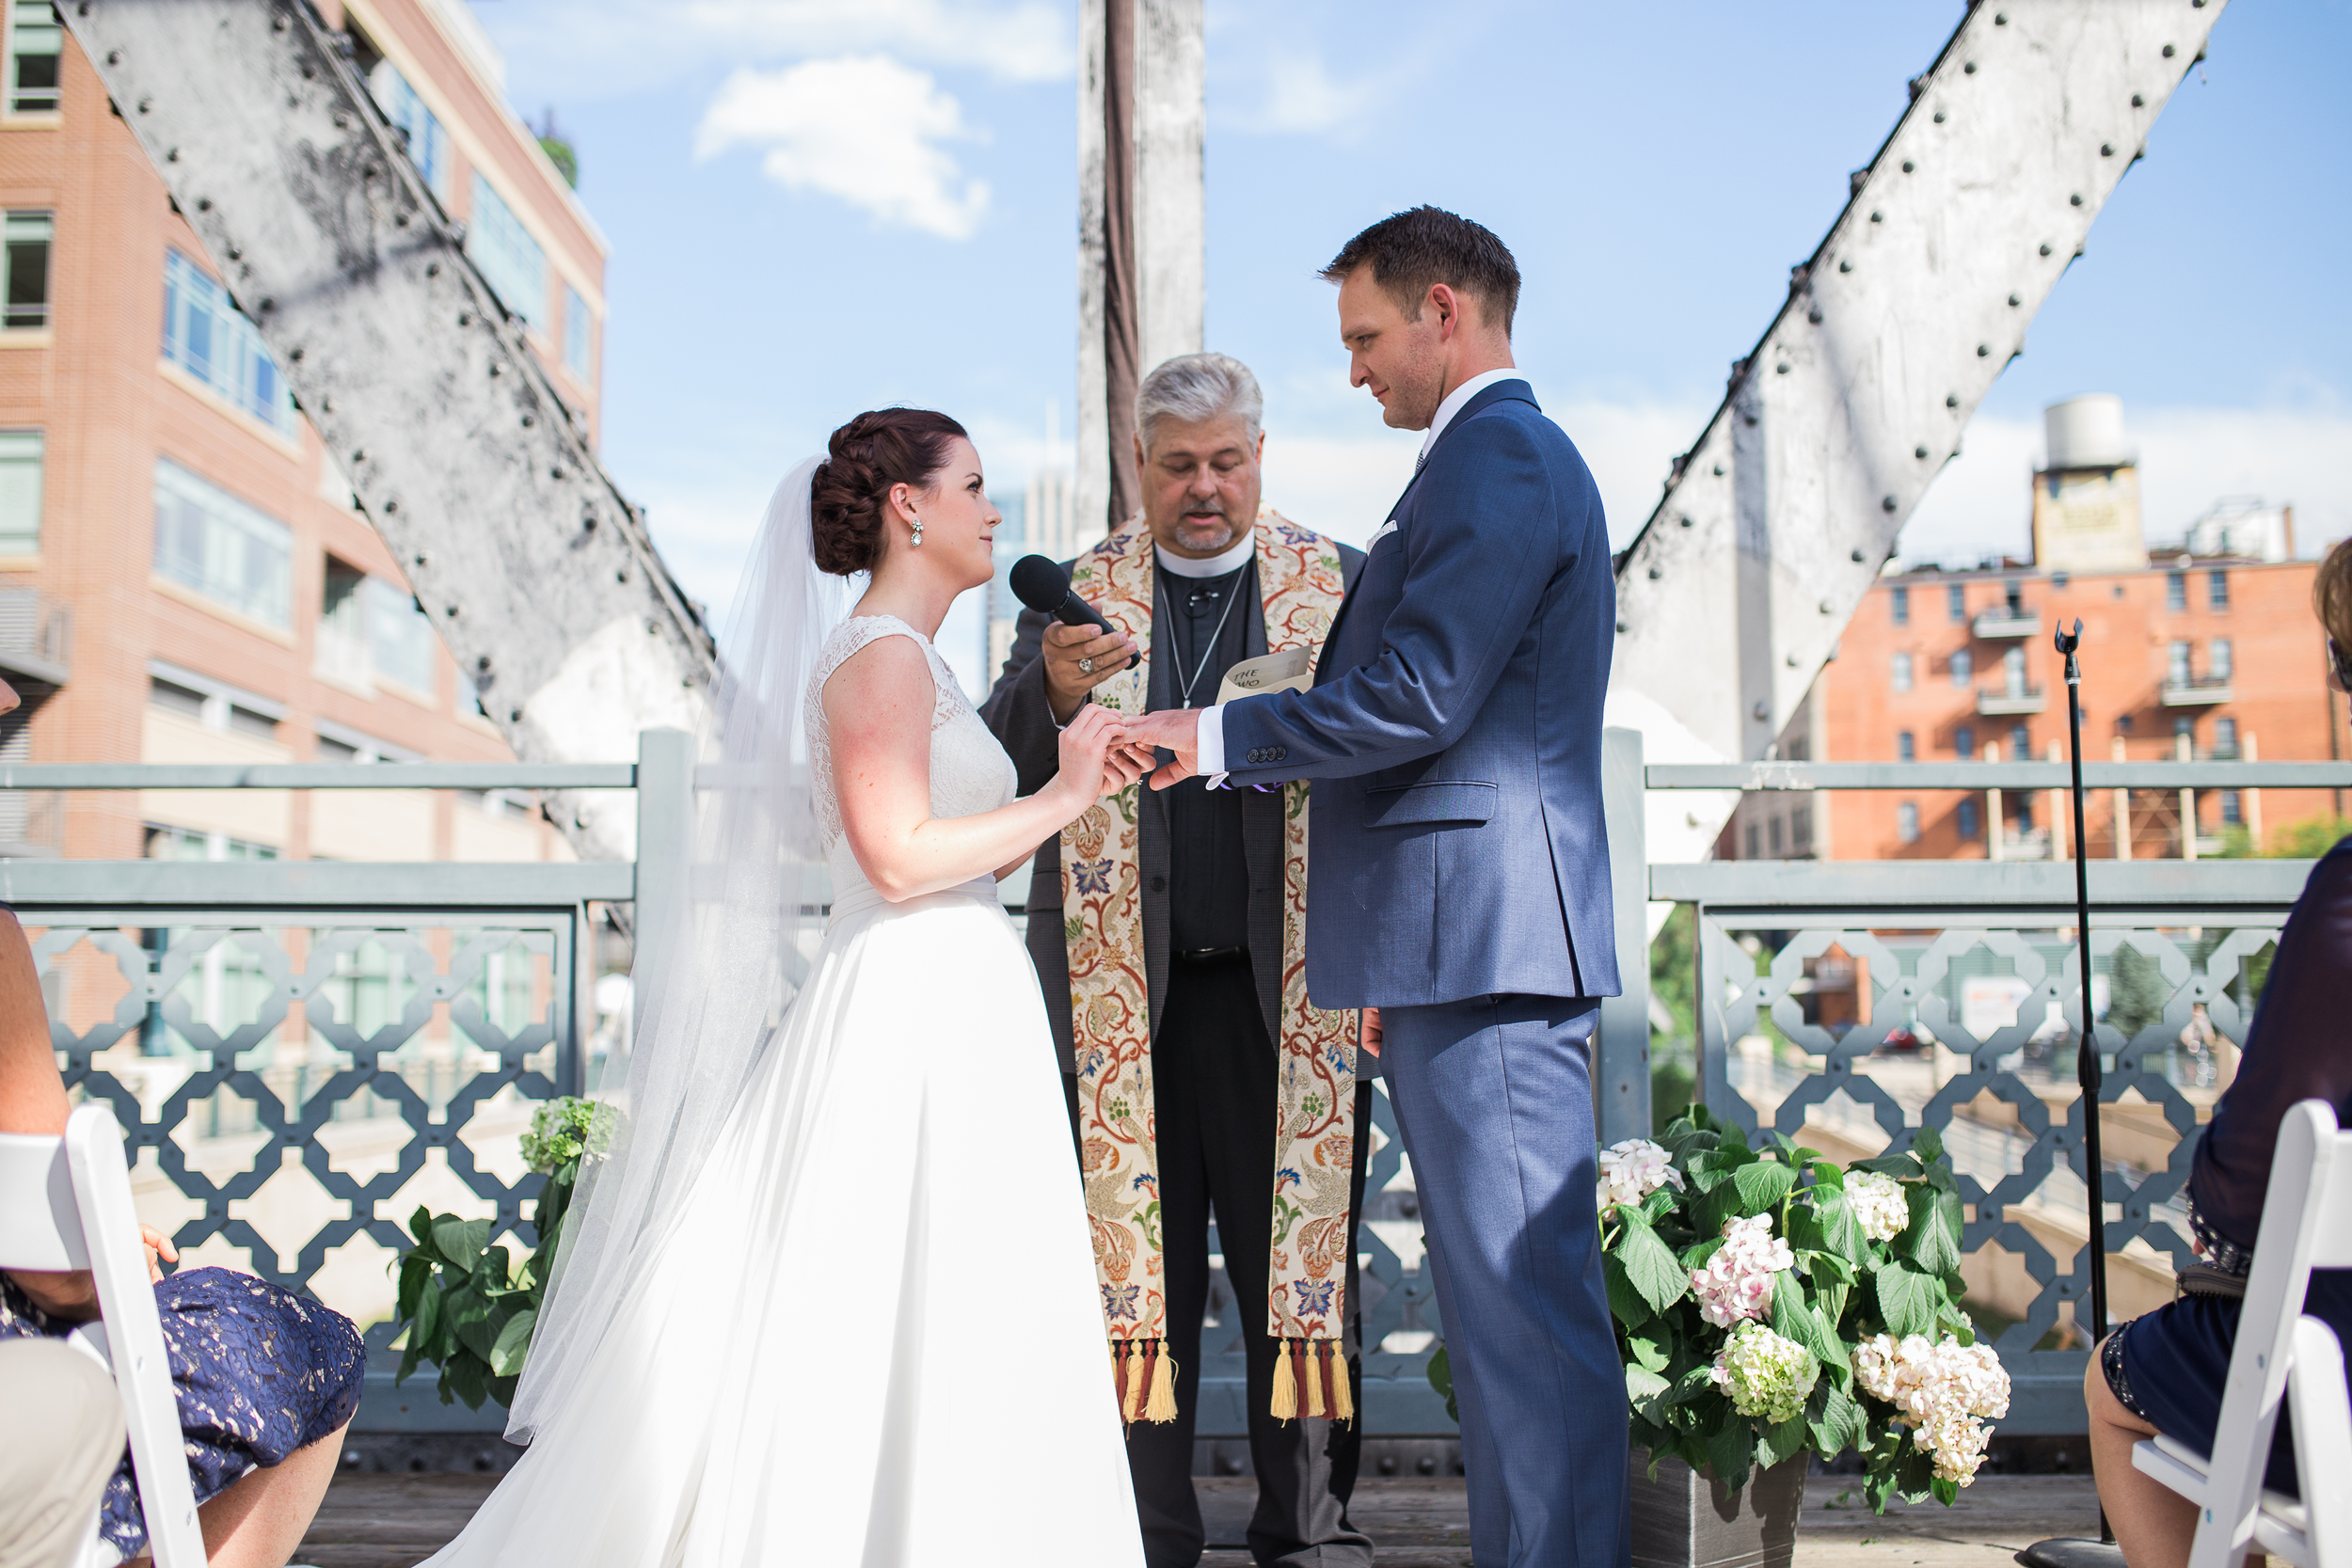 Coohills Wedding Photographer - wedding vows at Coohills bridge